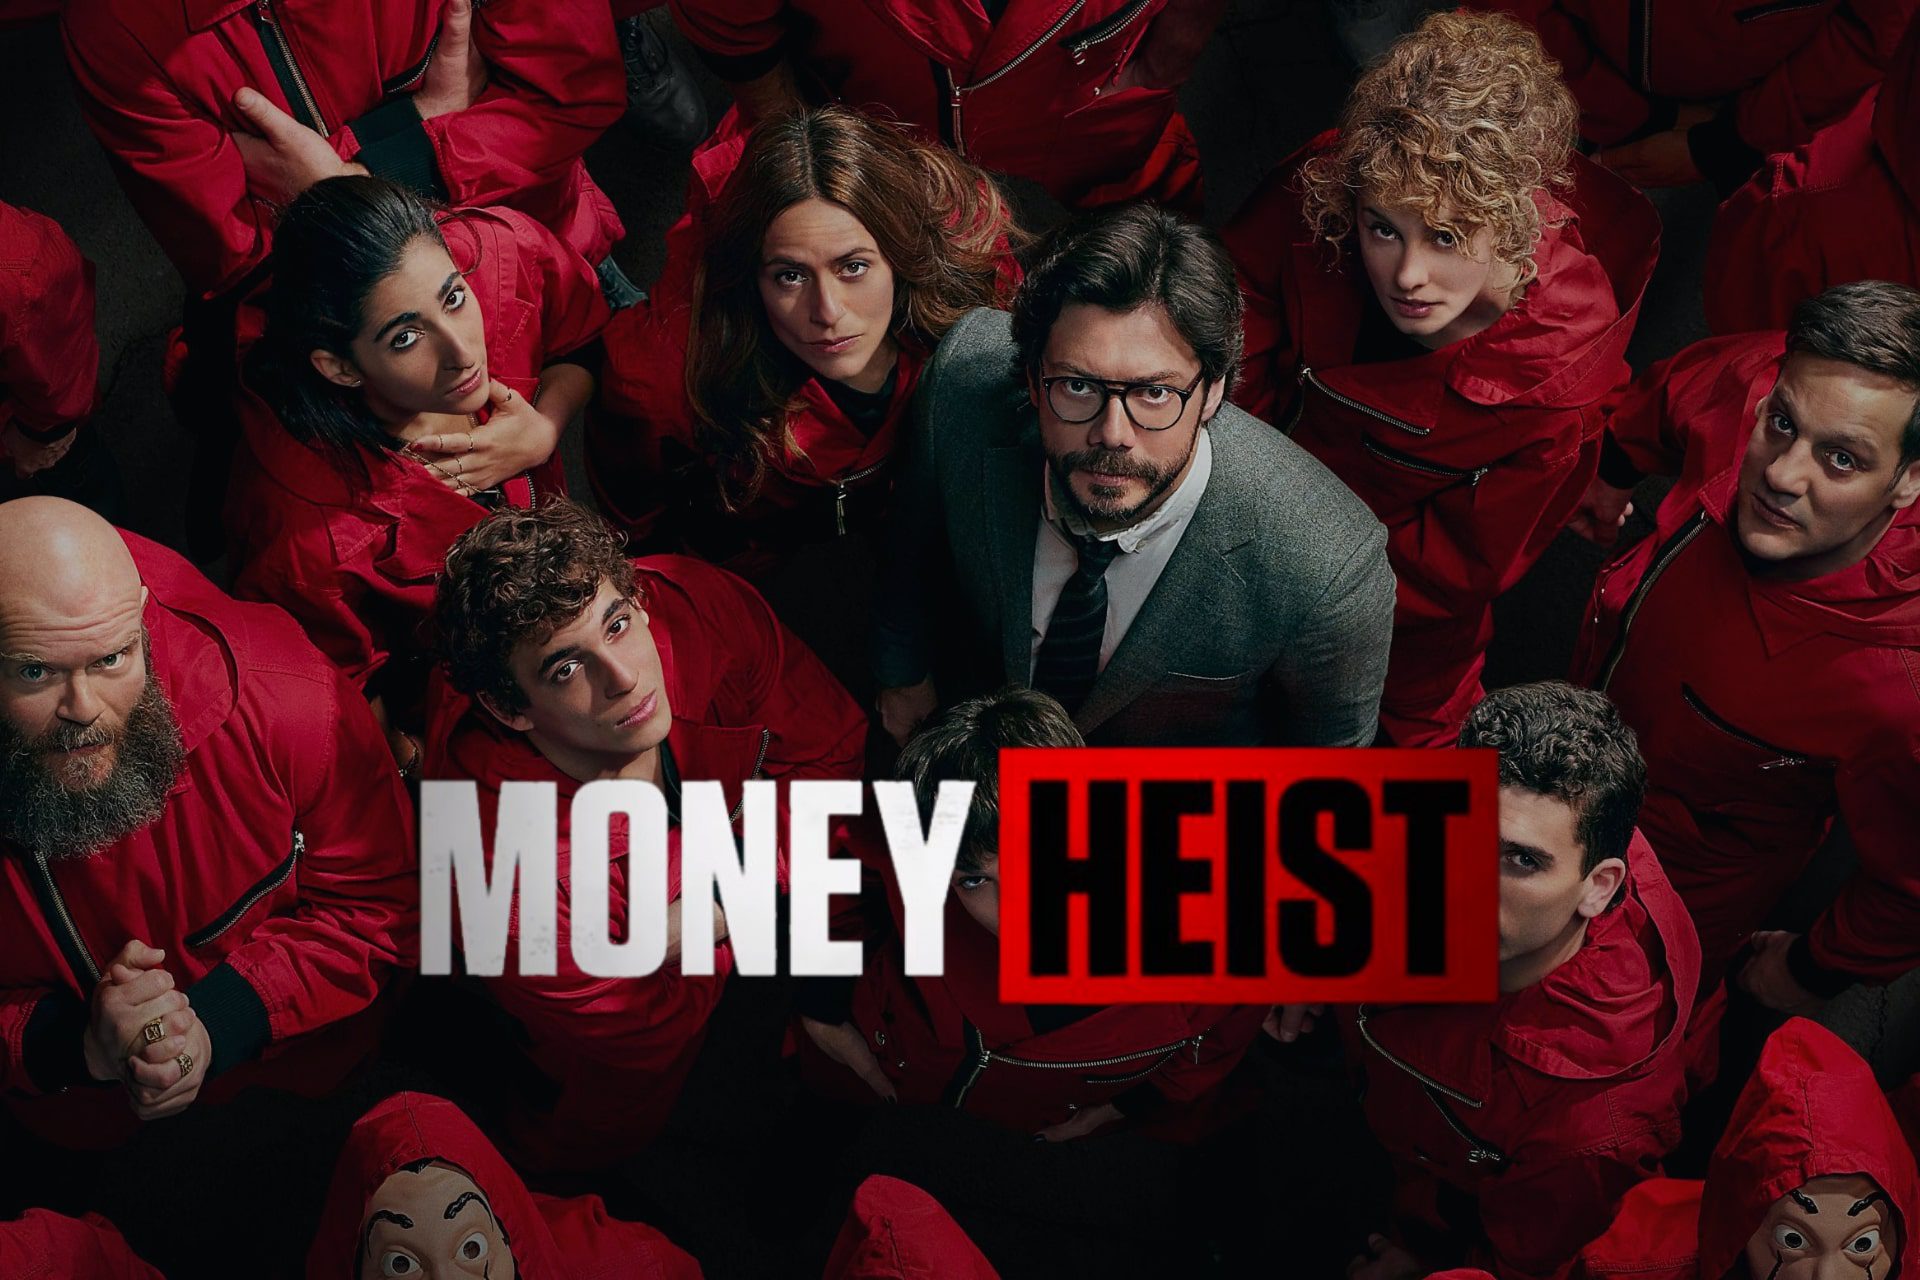 The very famous web series, Money Heist